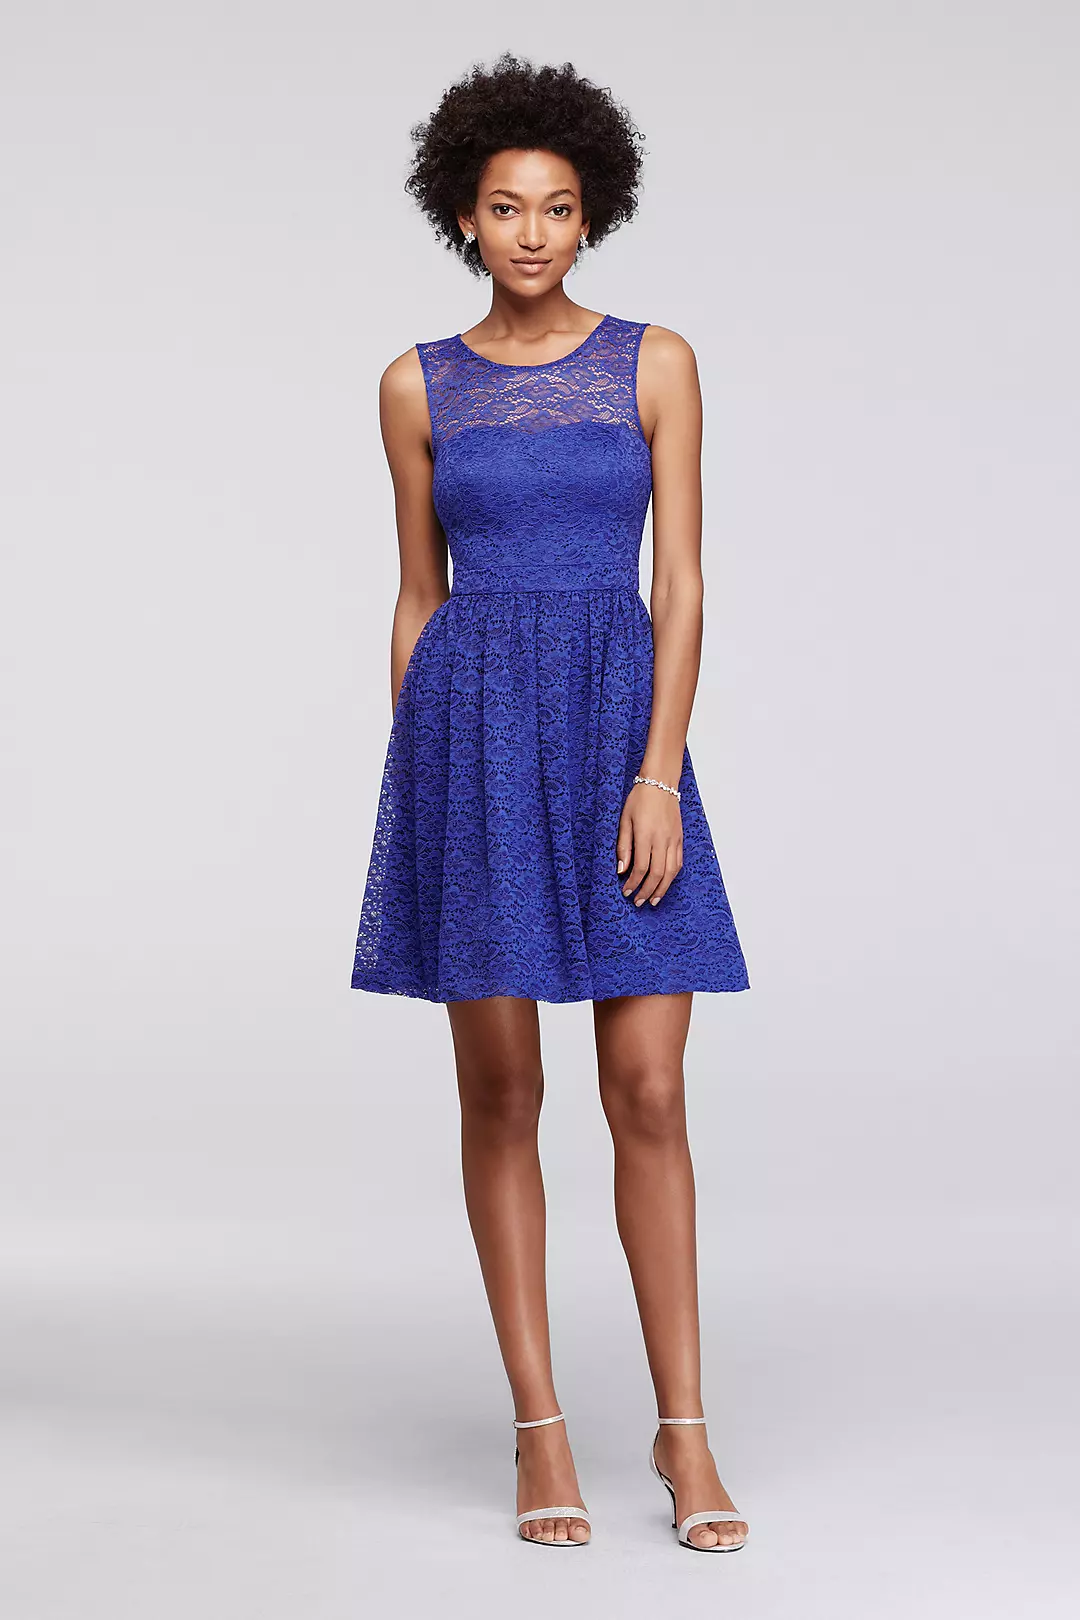 Short Lace A-Line Dress with Illusion Neckline Image